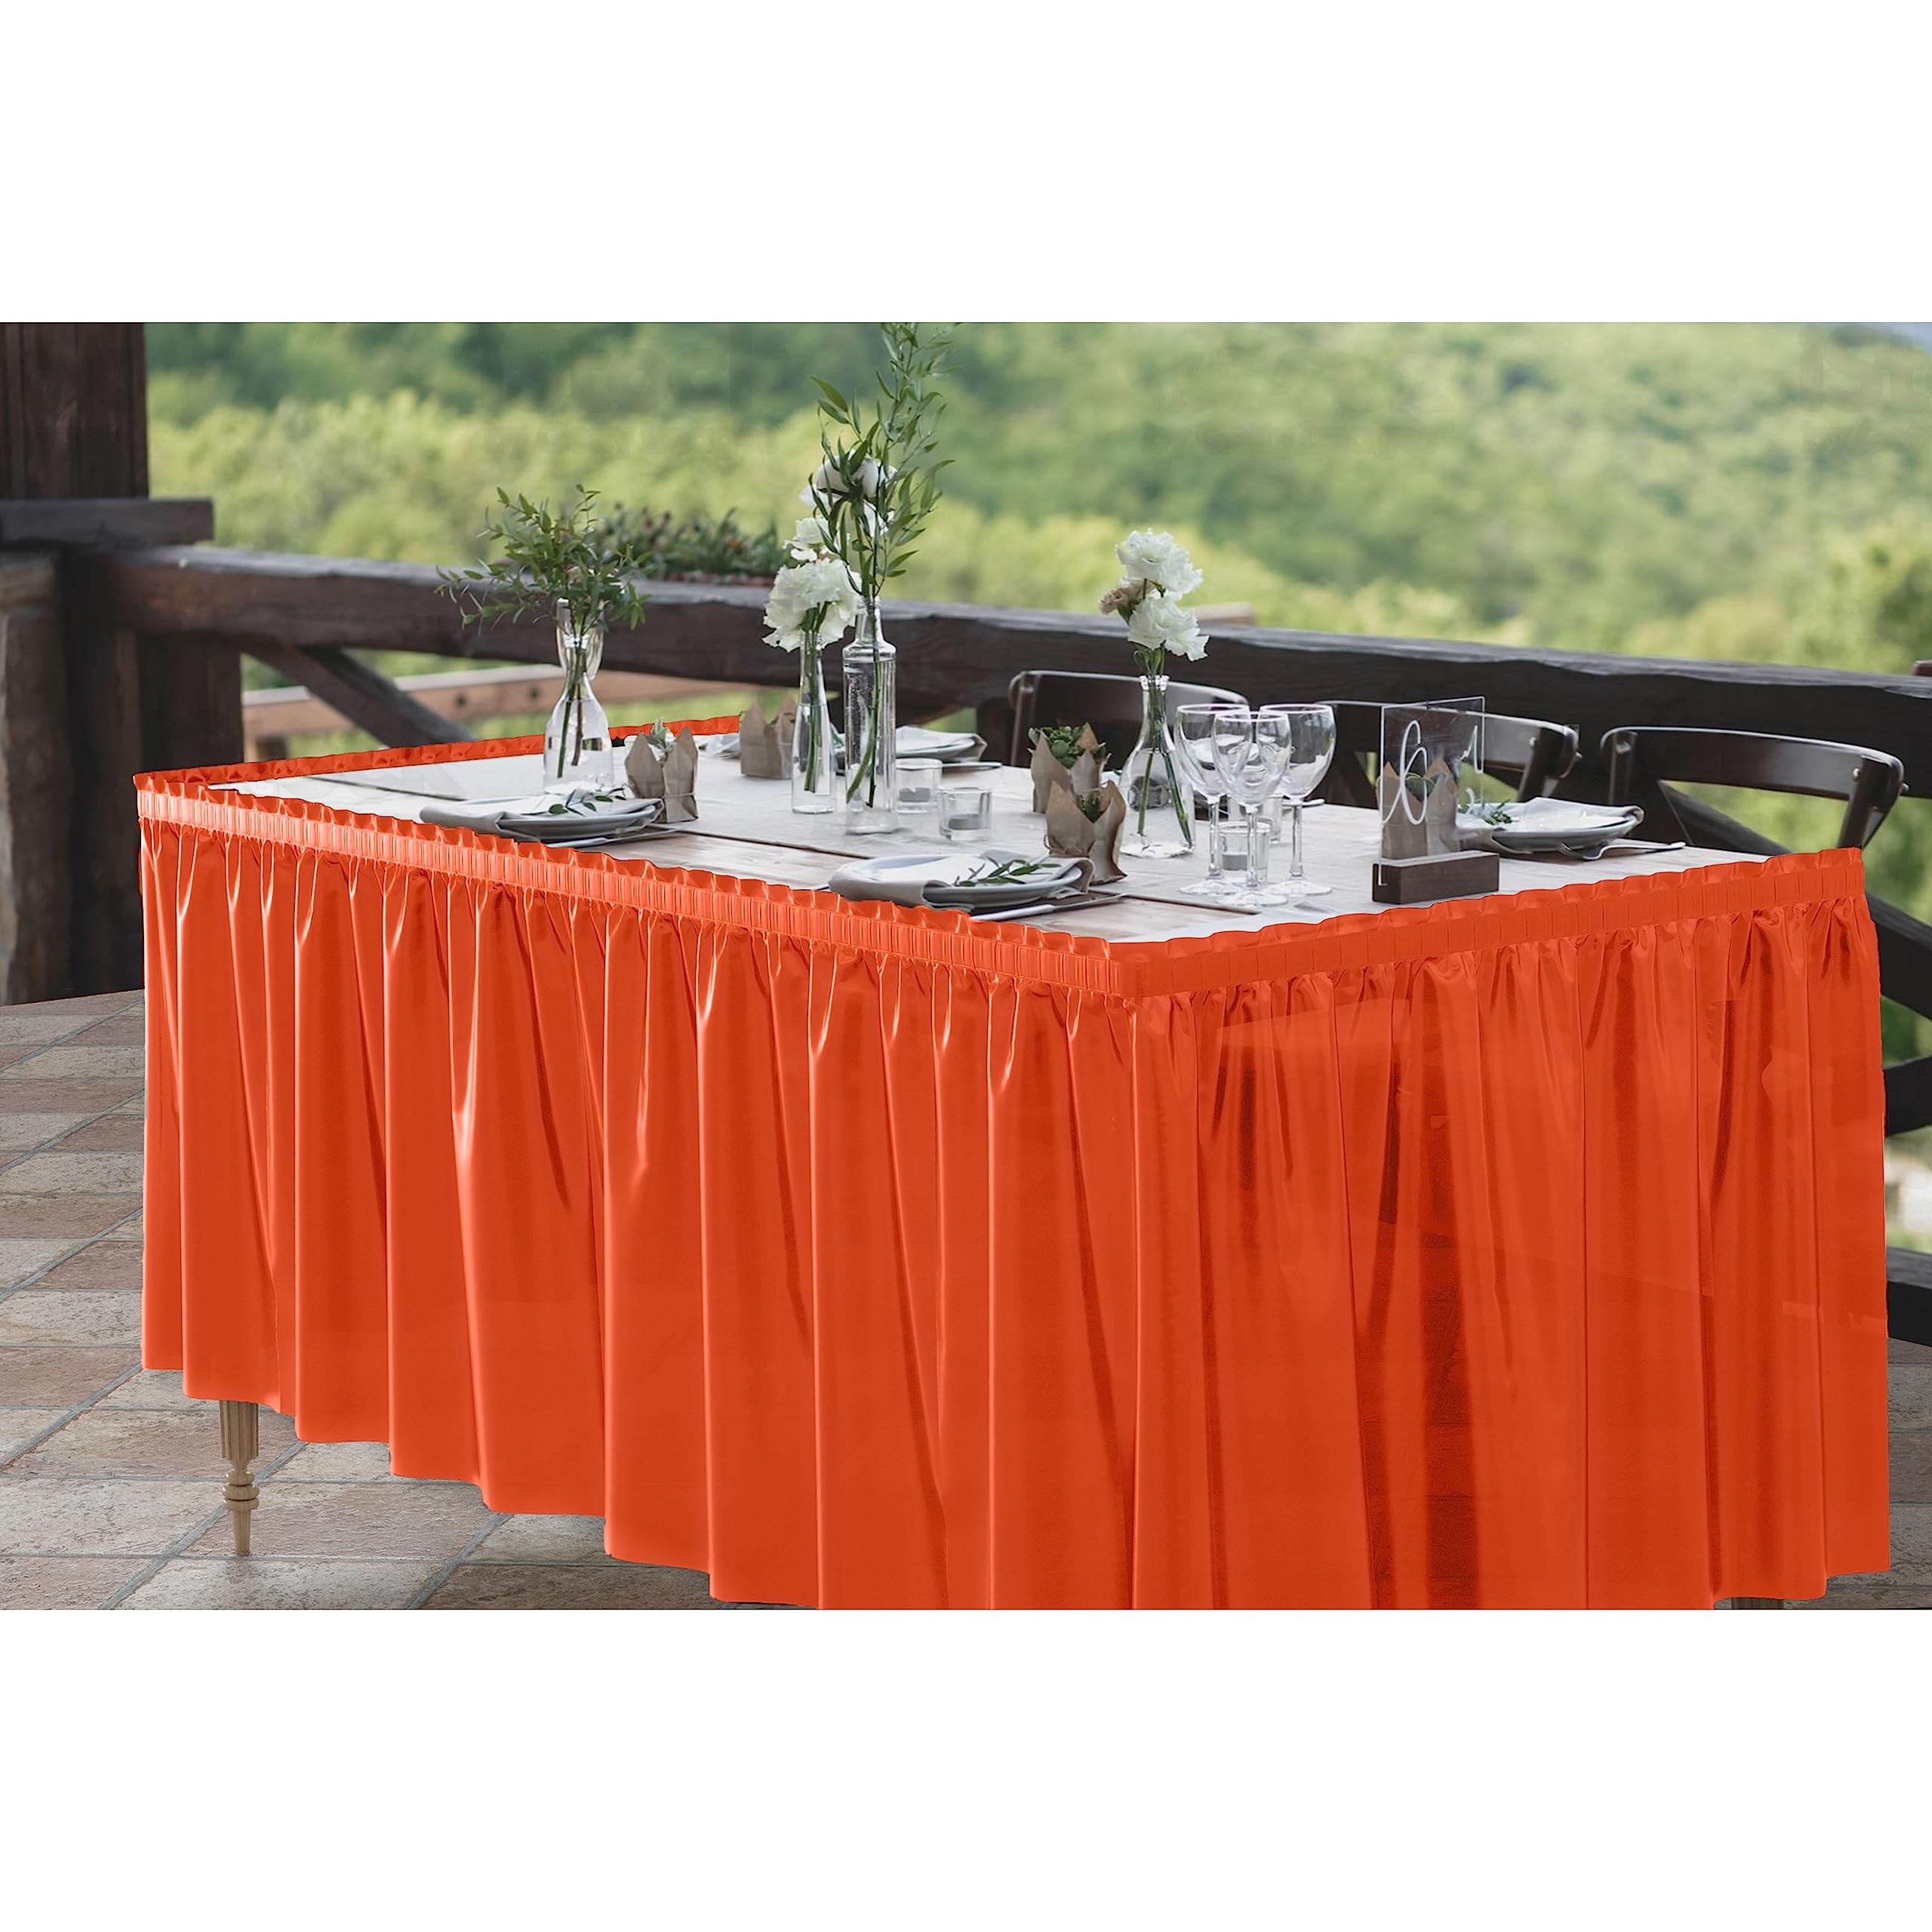 Orange Plastic Table Skirt